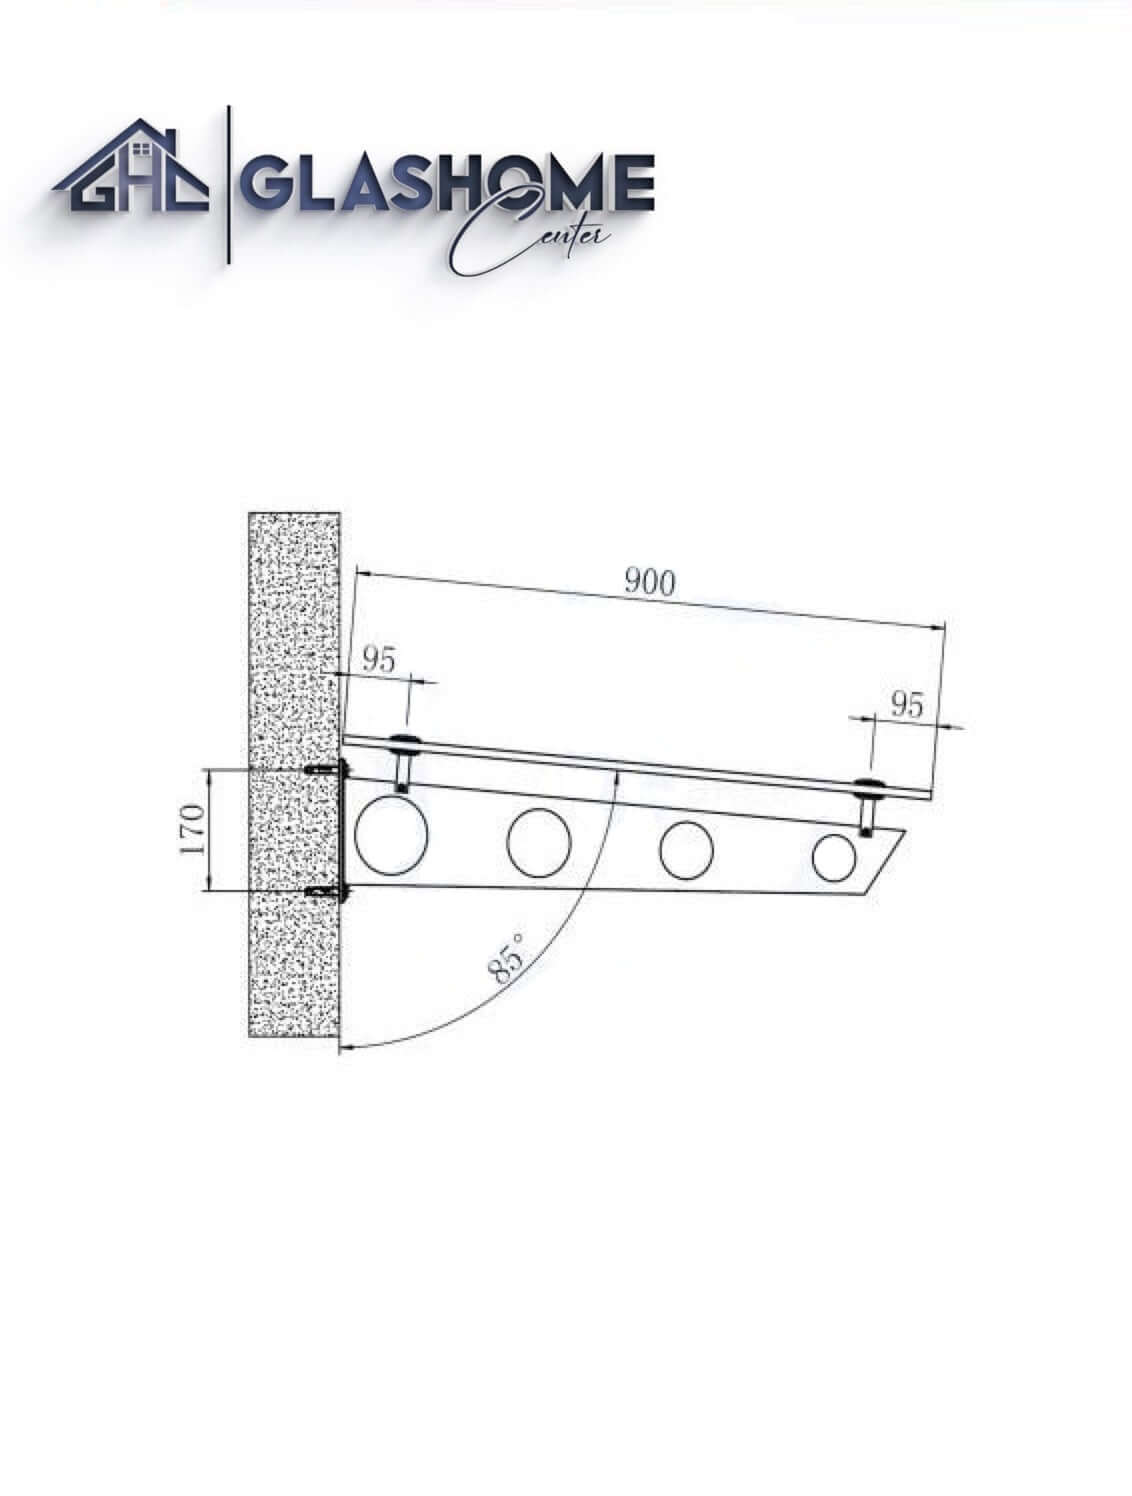 GlasHomeCenter - Glasvordach - Grauglas - 250x90cm - 13.1mm VSG - inkl. 3 Edelstahlhalterungen Variante "Stockholm"